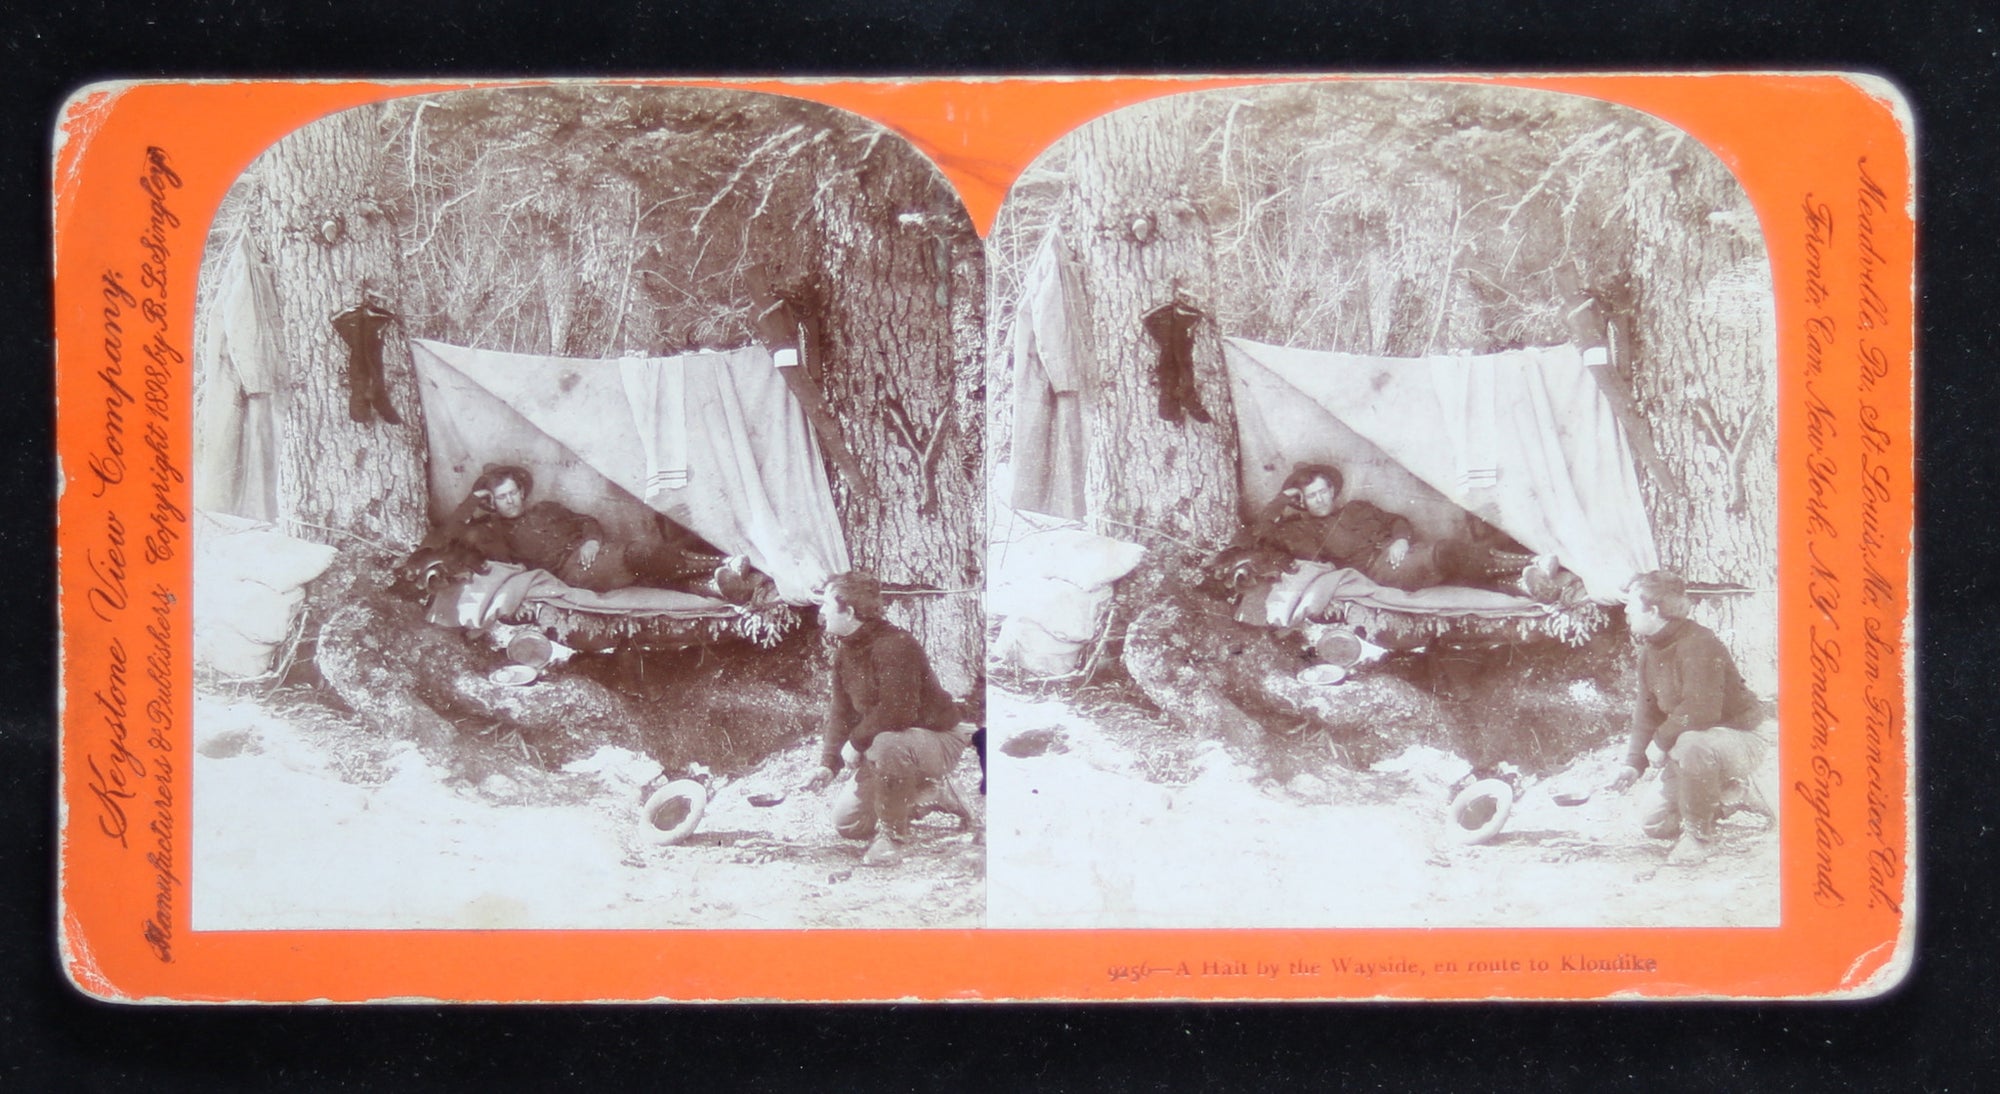 1898 stereoscopic view of Klondike Gold Rush – Halt by the wayside